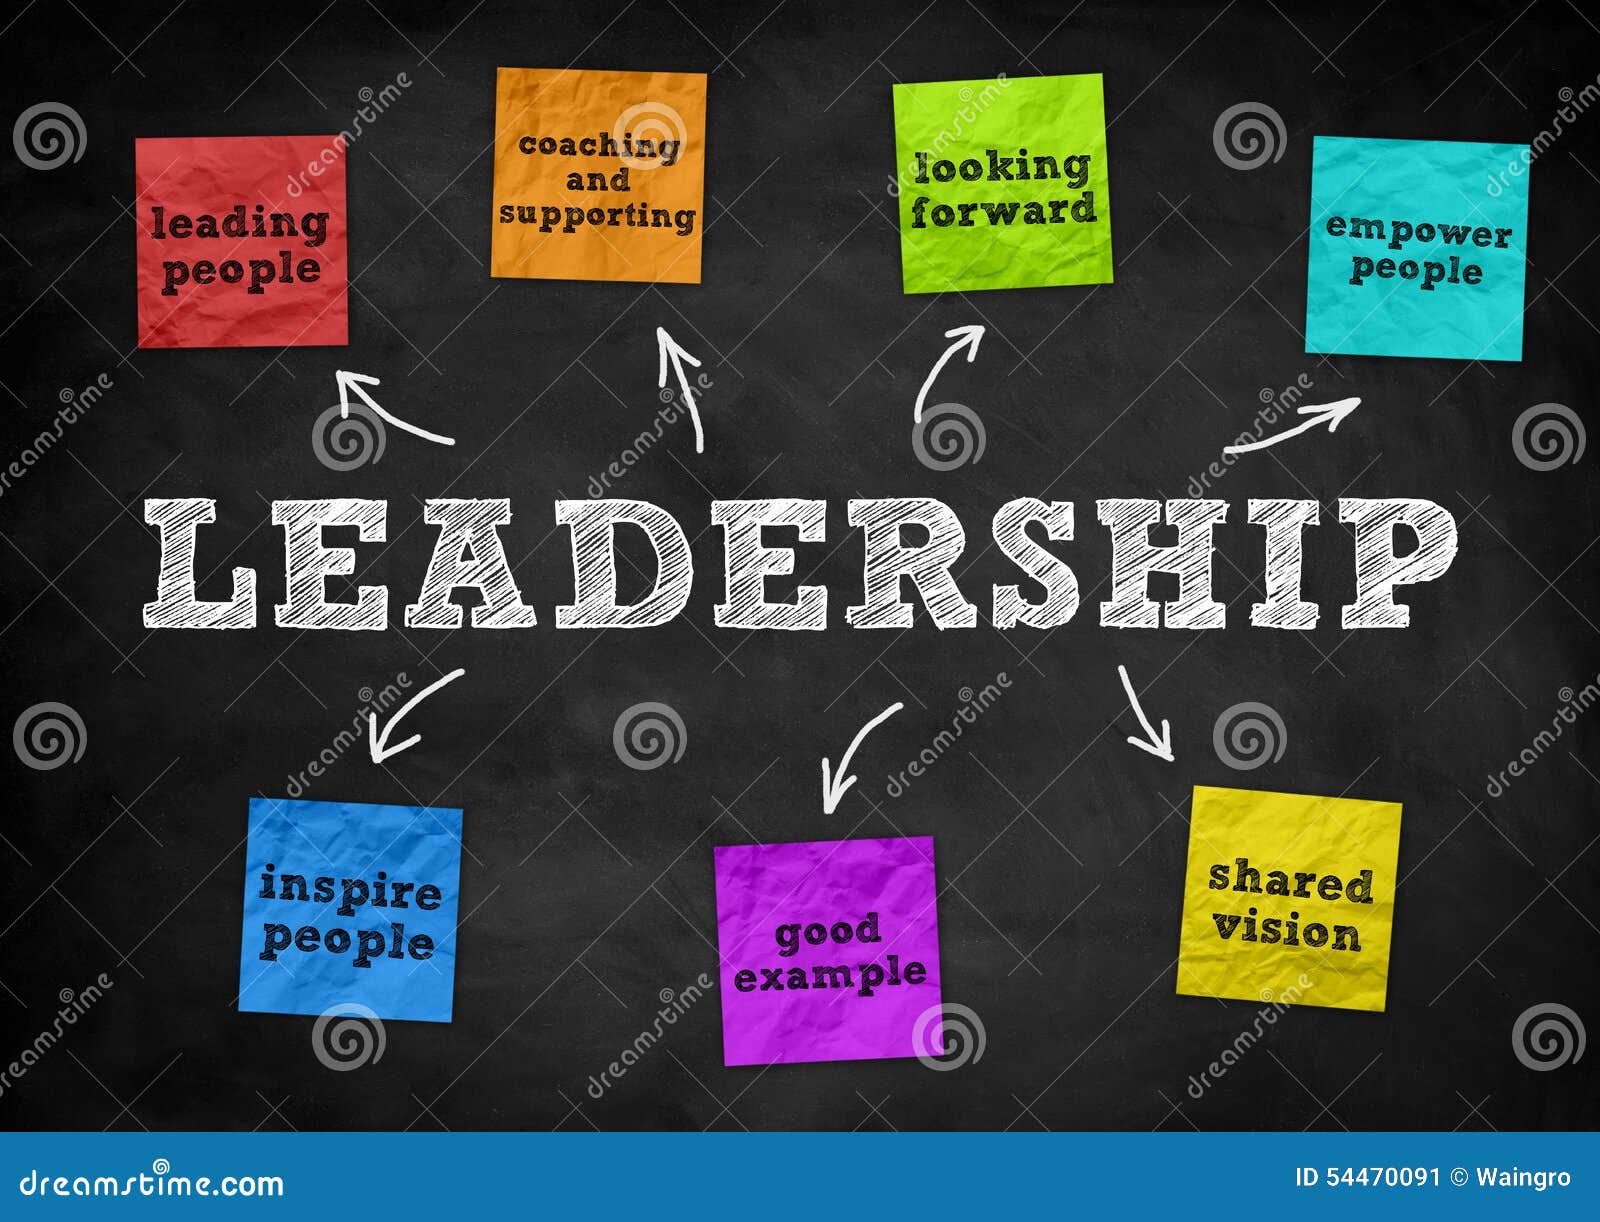 leadership - blackboard concept